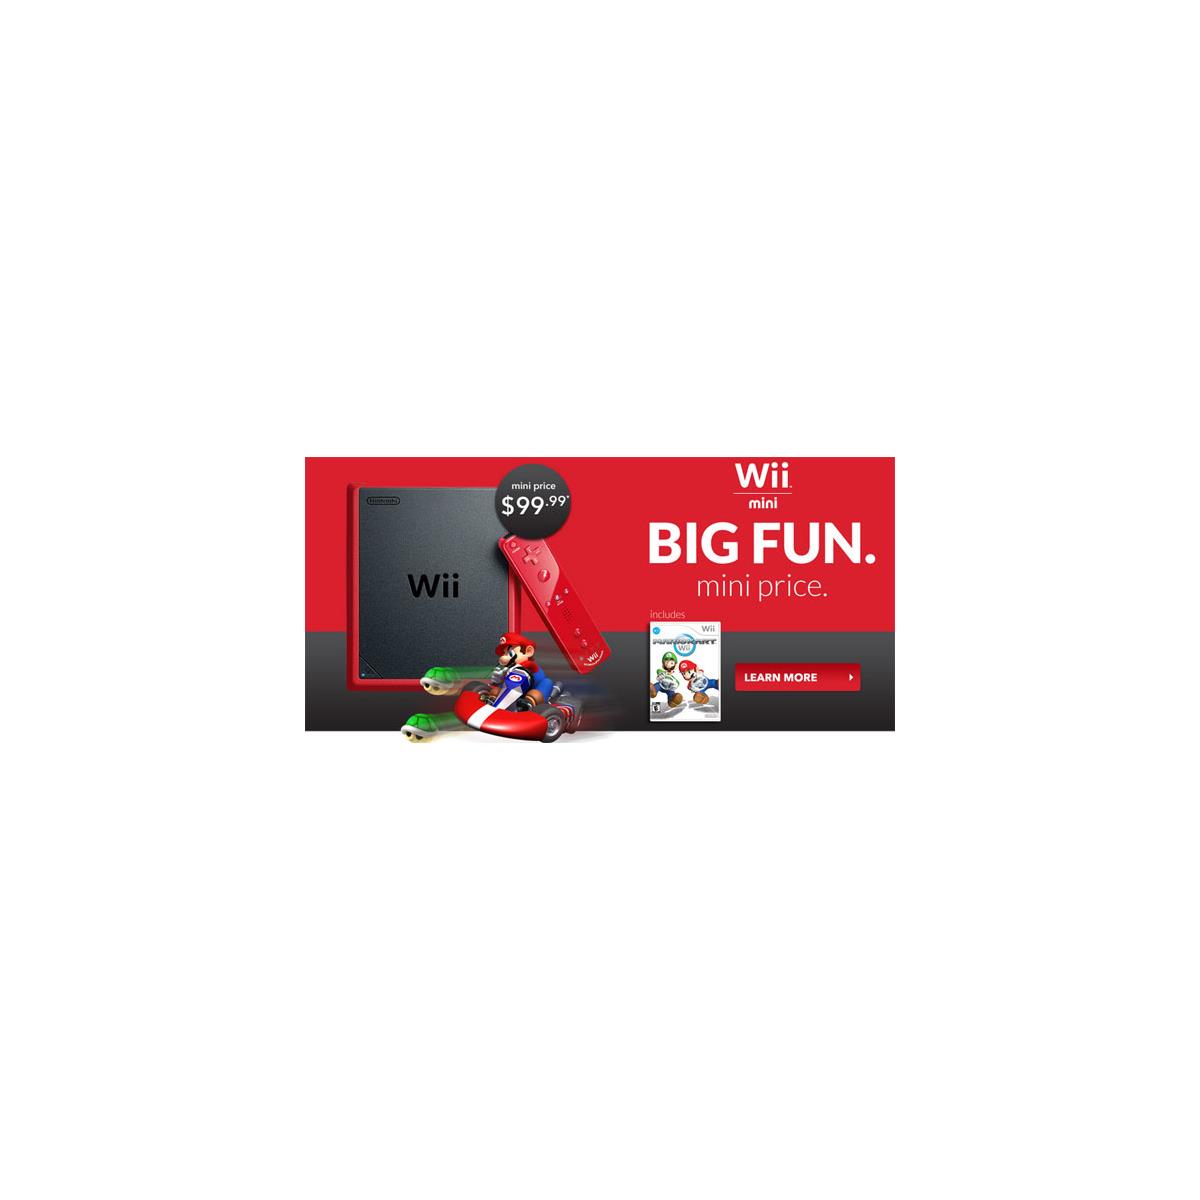 Nintendo's $99 Wii Mini Console Headed to the U.S. in November